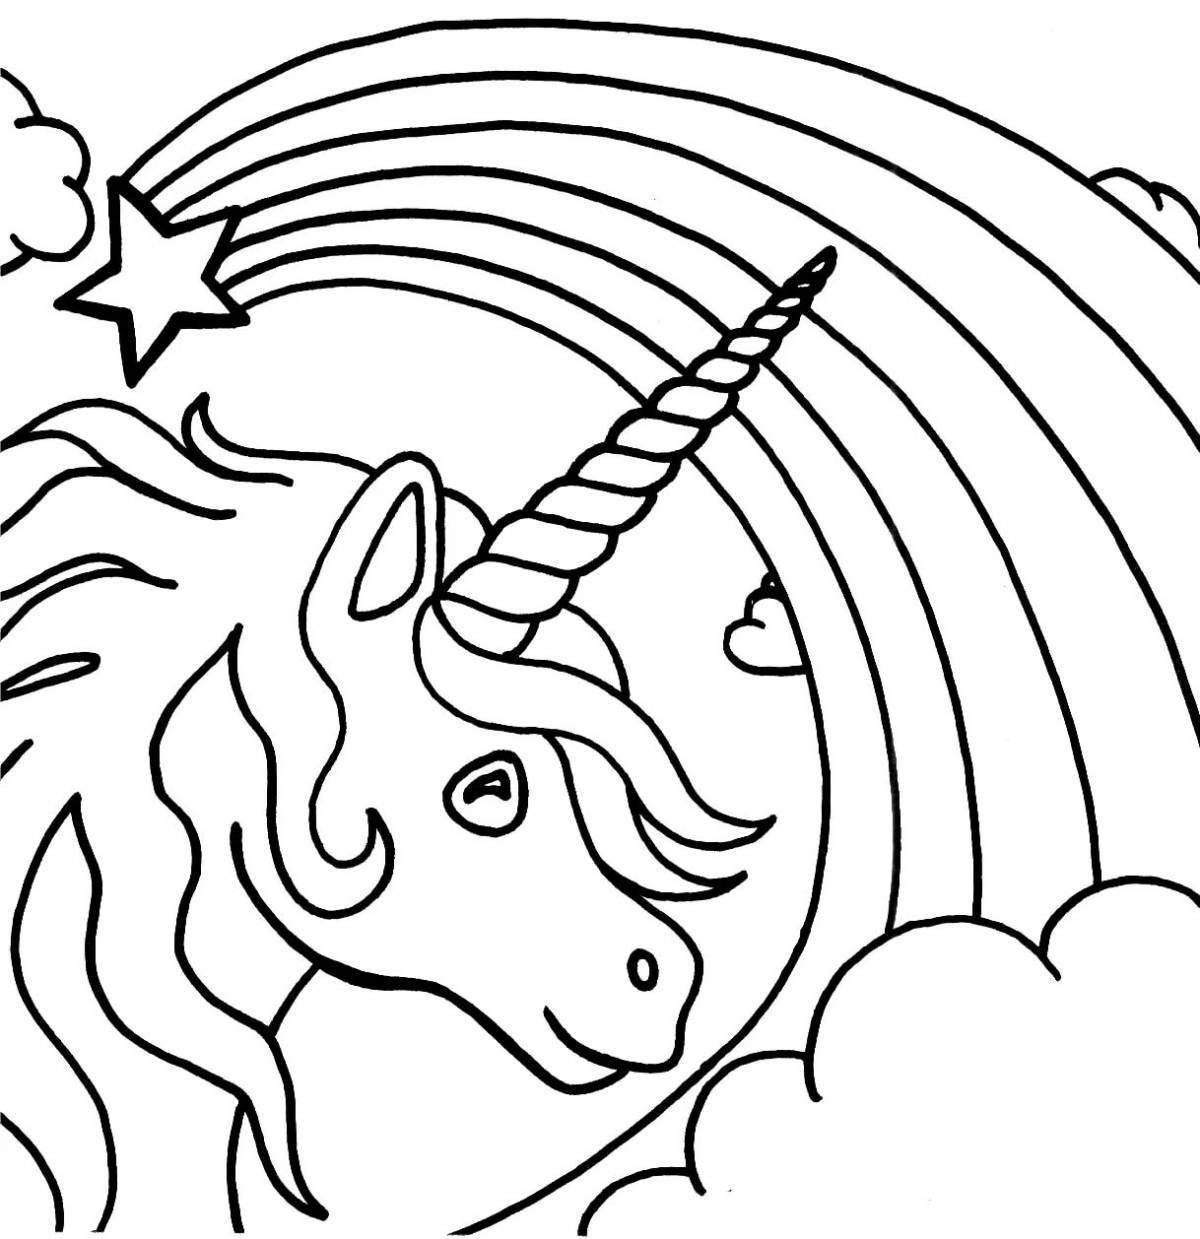 Charming unicorn man coloring book